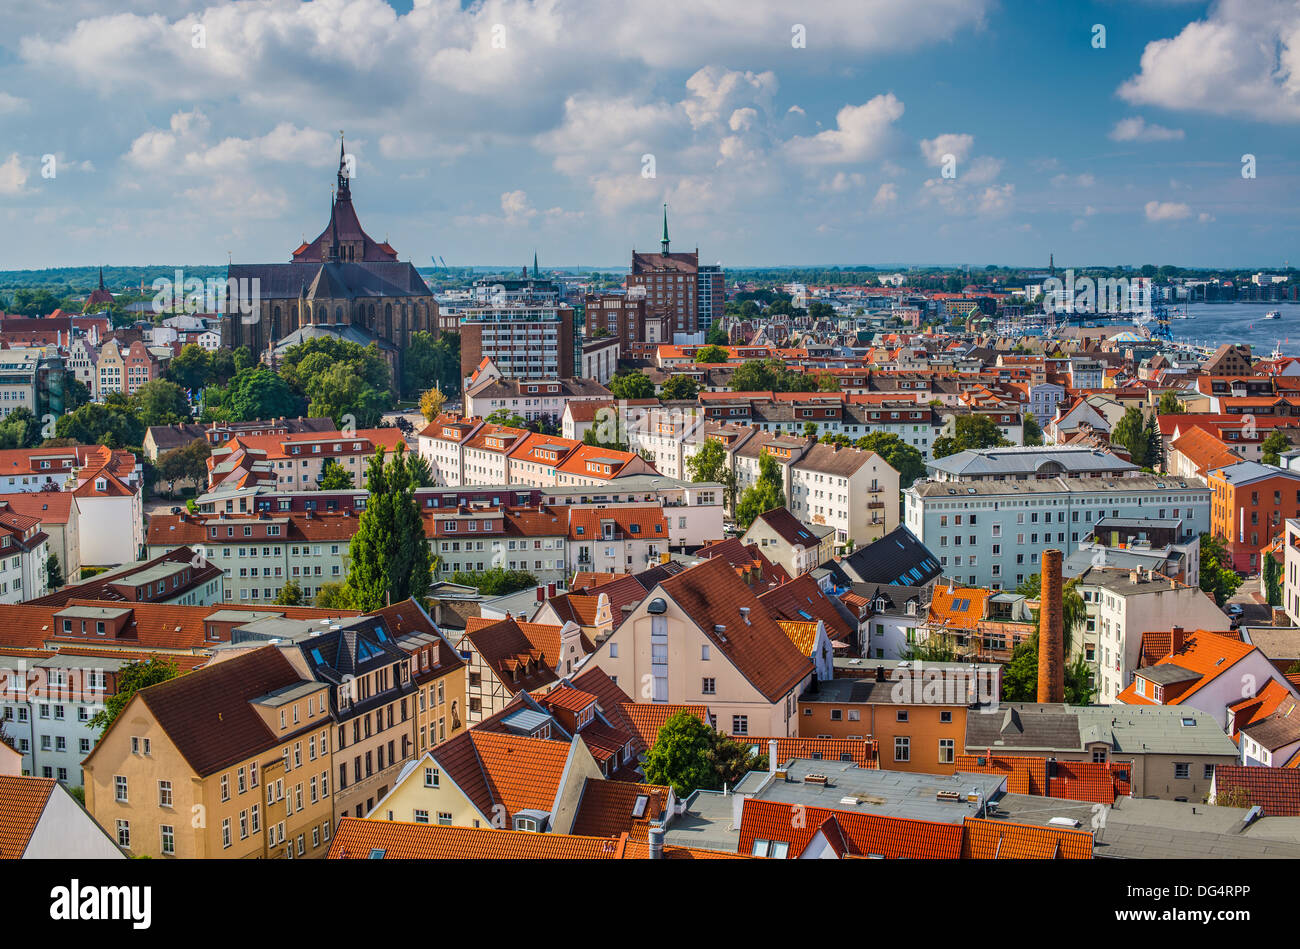 Rostock, Germany city skyline. Stock Photo